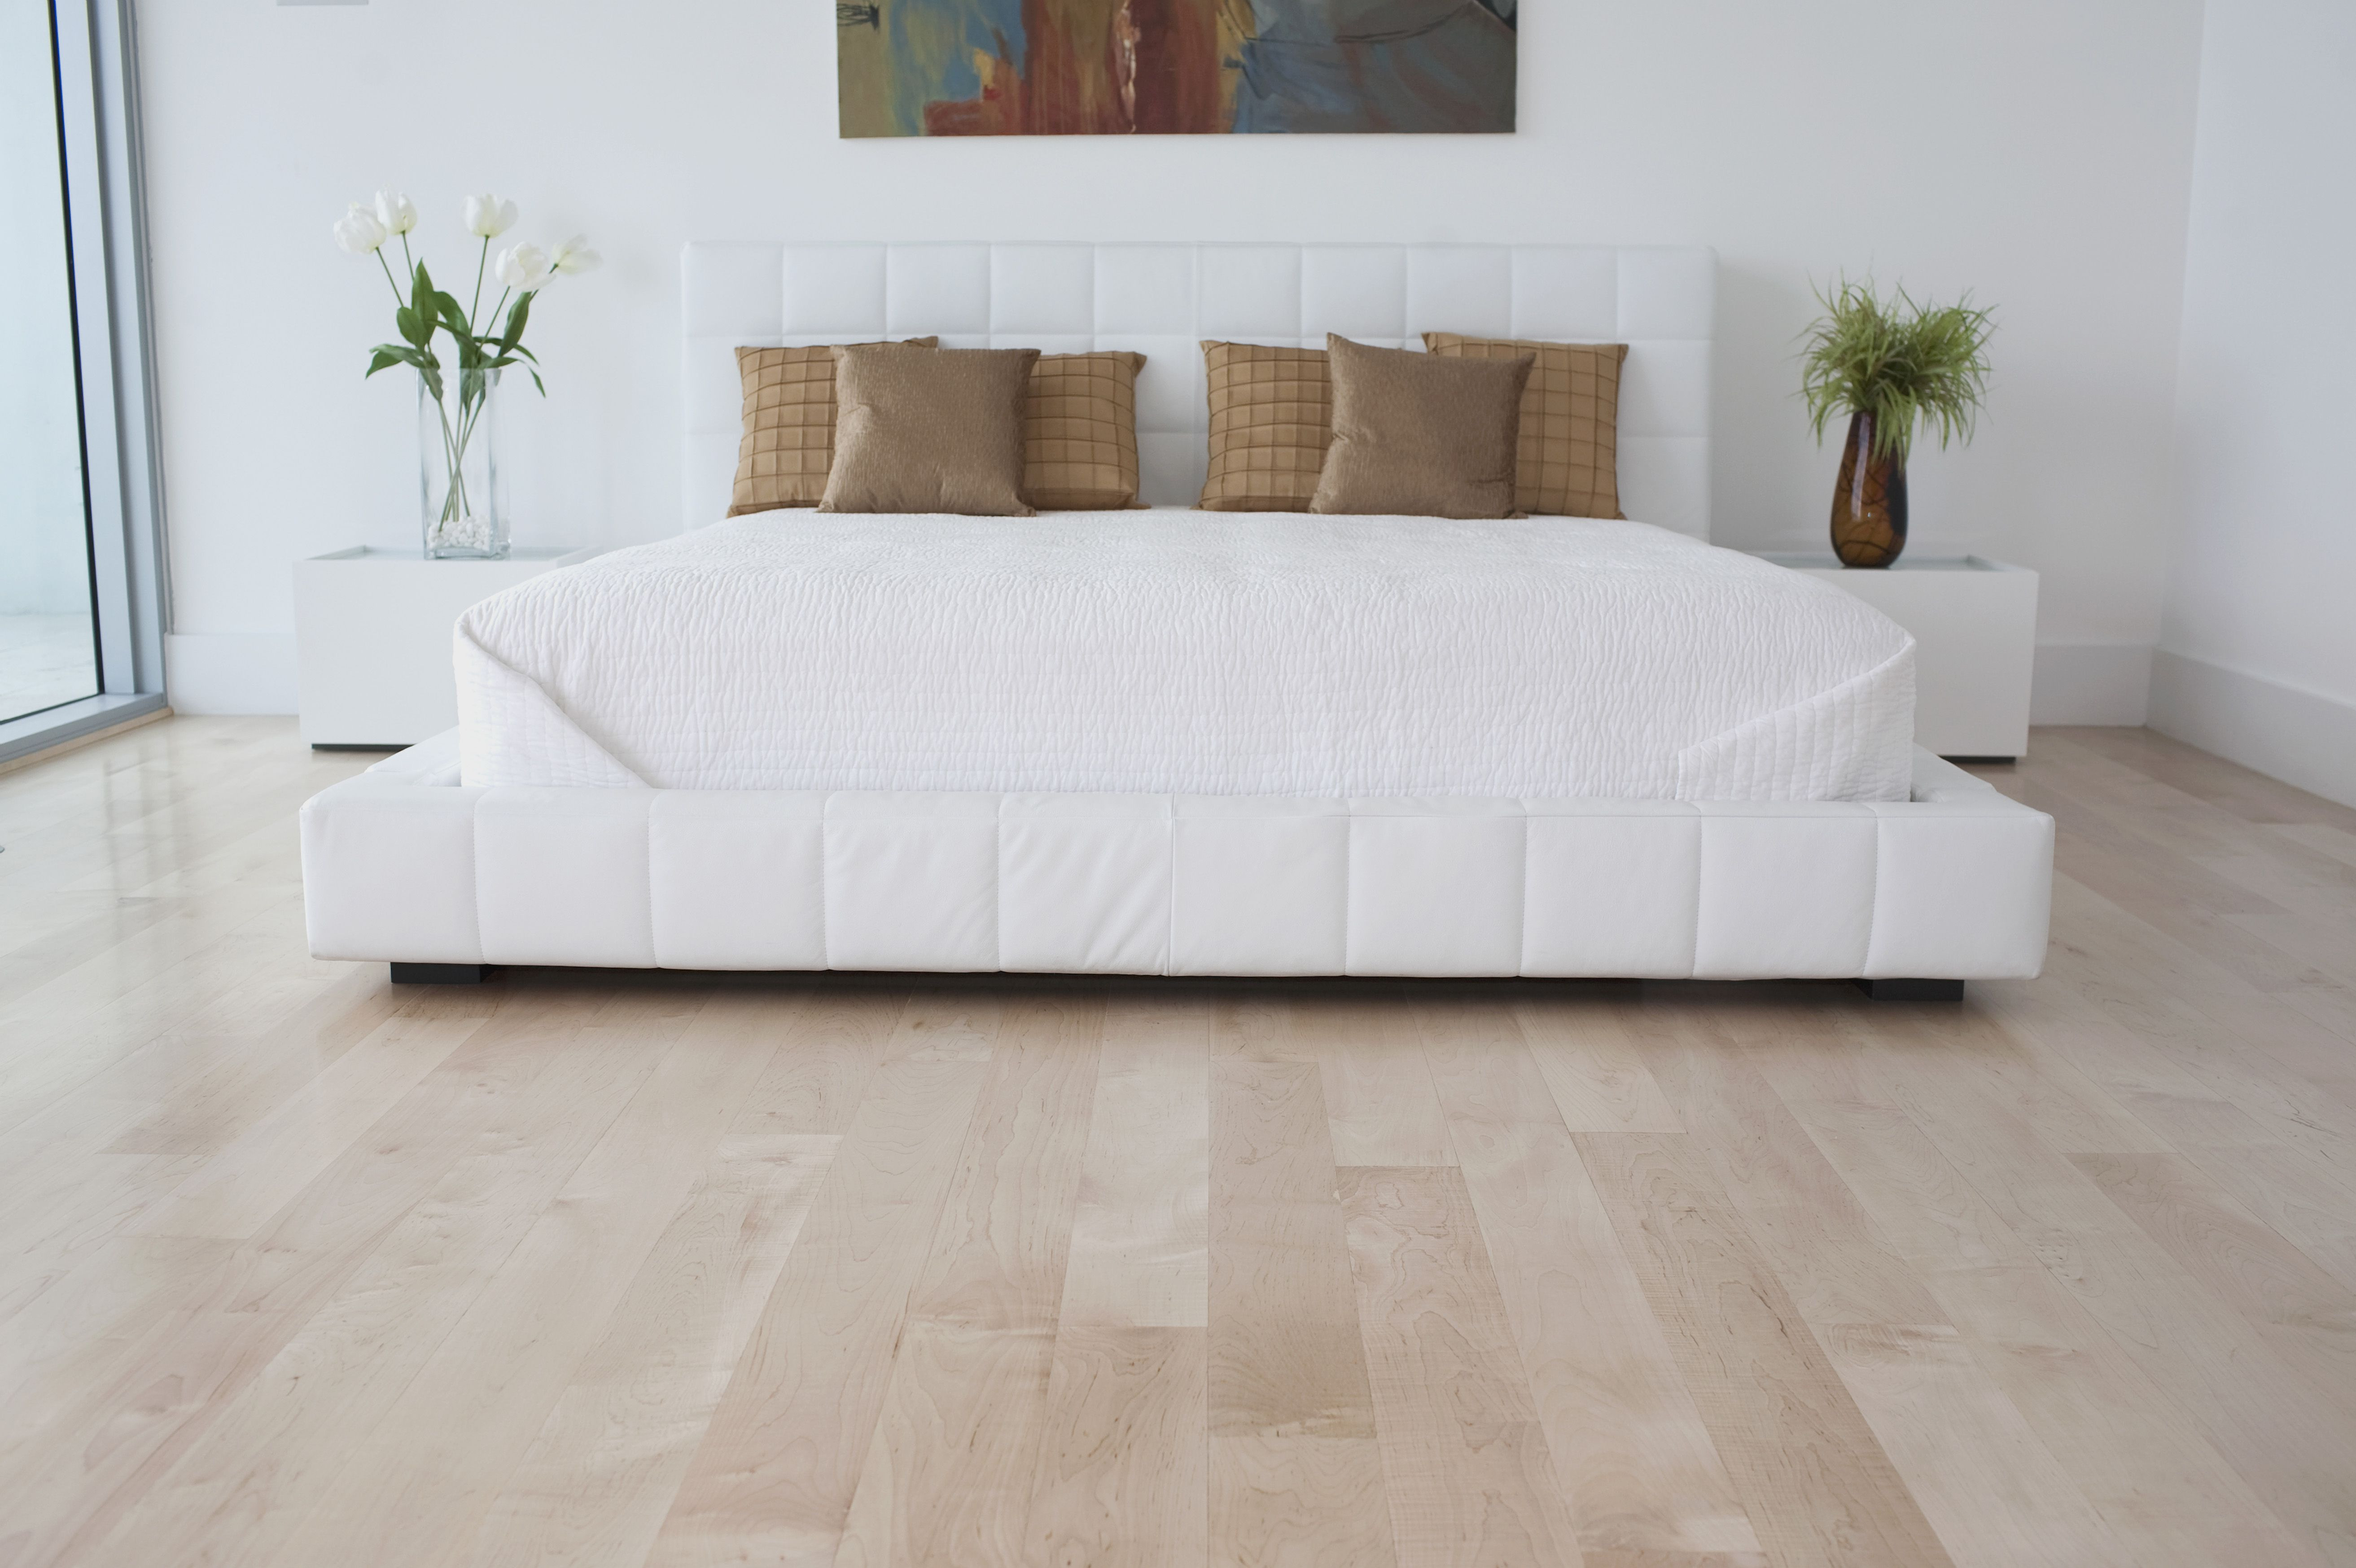 18 Perfect Best Hardwood Floor Vacuum Under $100 2022 free download best hardwood floor vacuum under 100 of 5 best bedroom flooring materials within interiors of a bedroom 126171674 57be063d3df78cc16e3cc6cf